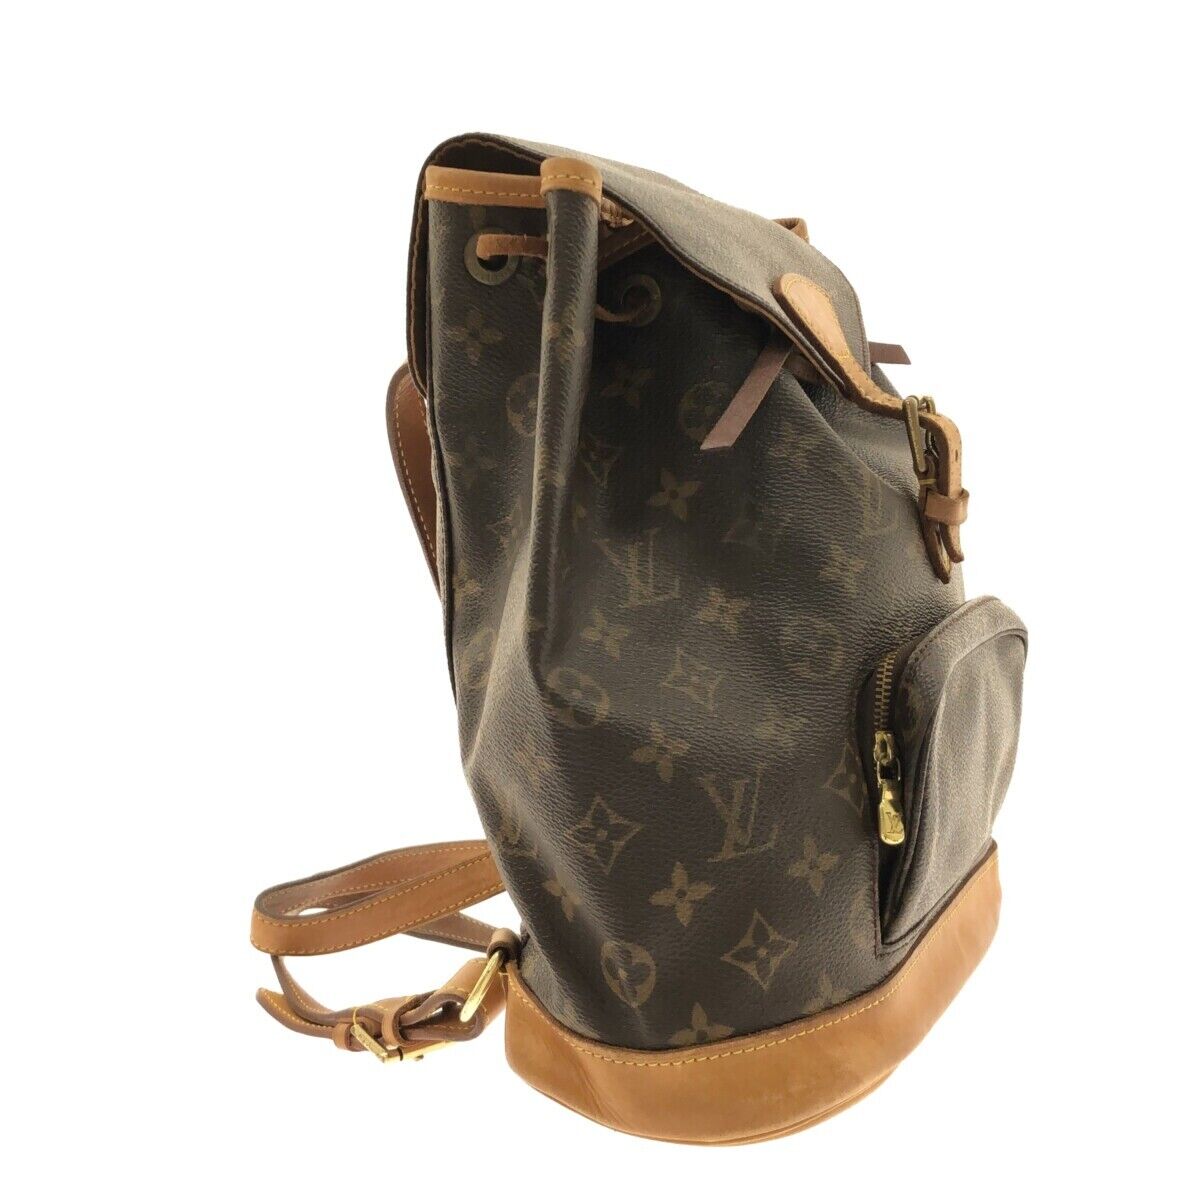 Louis Vuitton Monogram Montsouris MM M51136 Bag Backpack Free